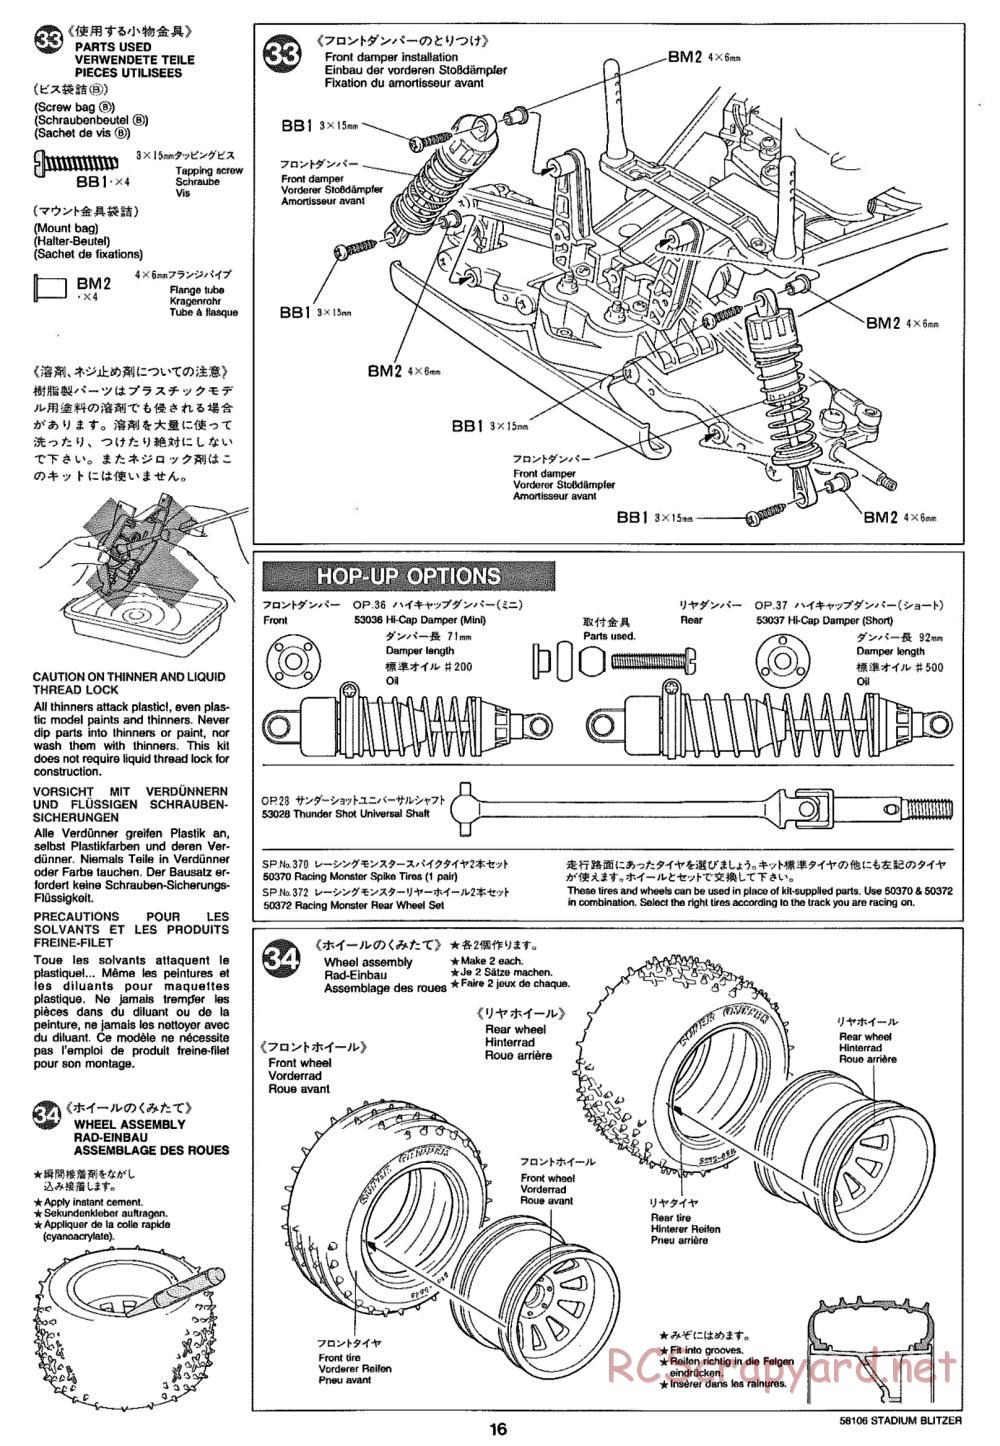 Tamiya - Stadium Blitzer Chassis - Manual - Page 16